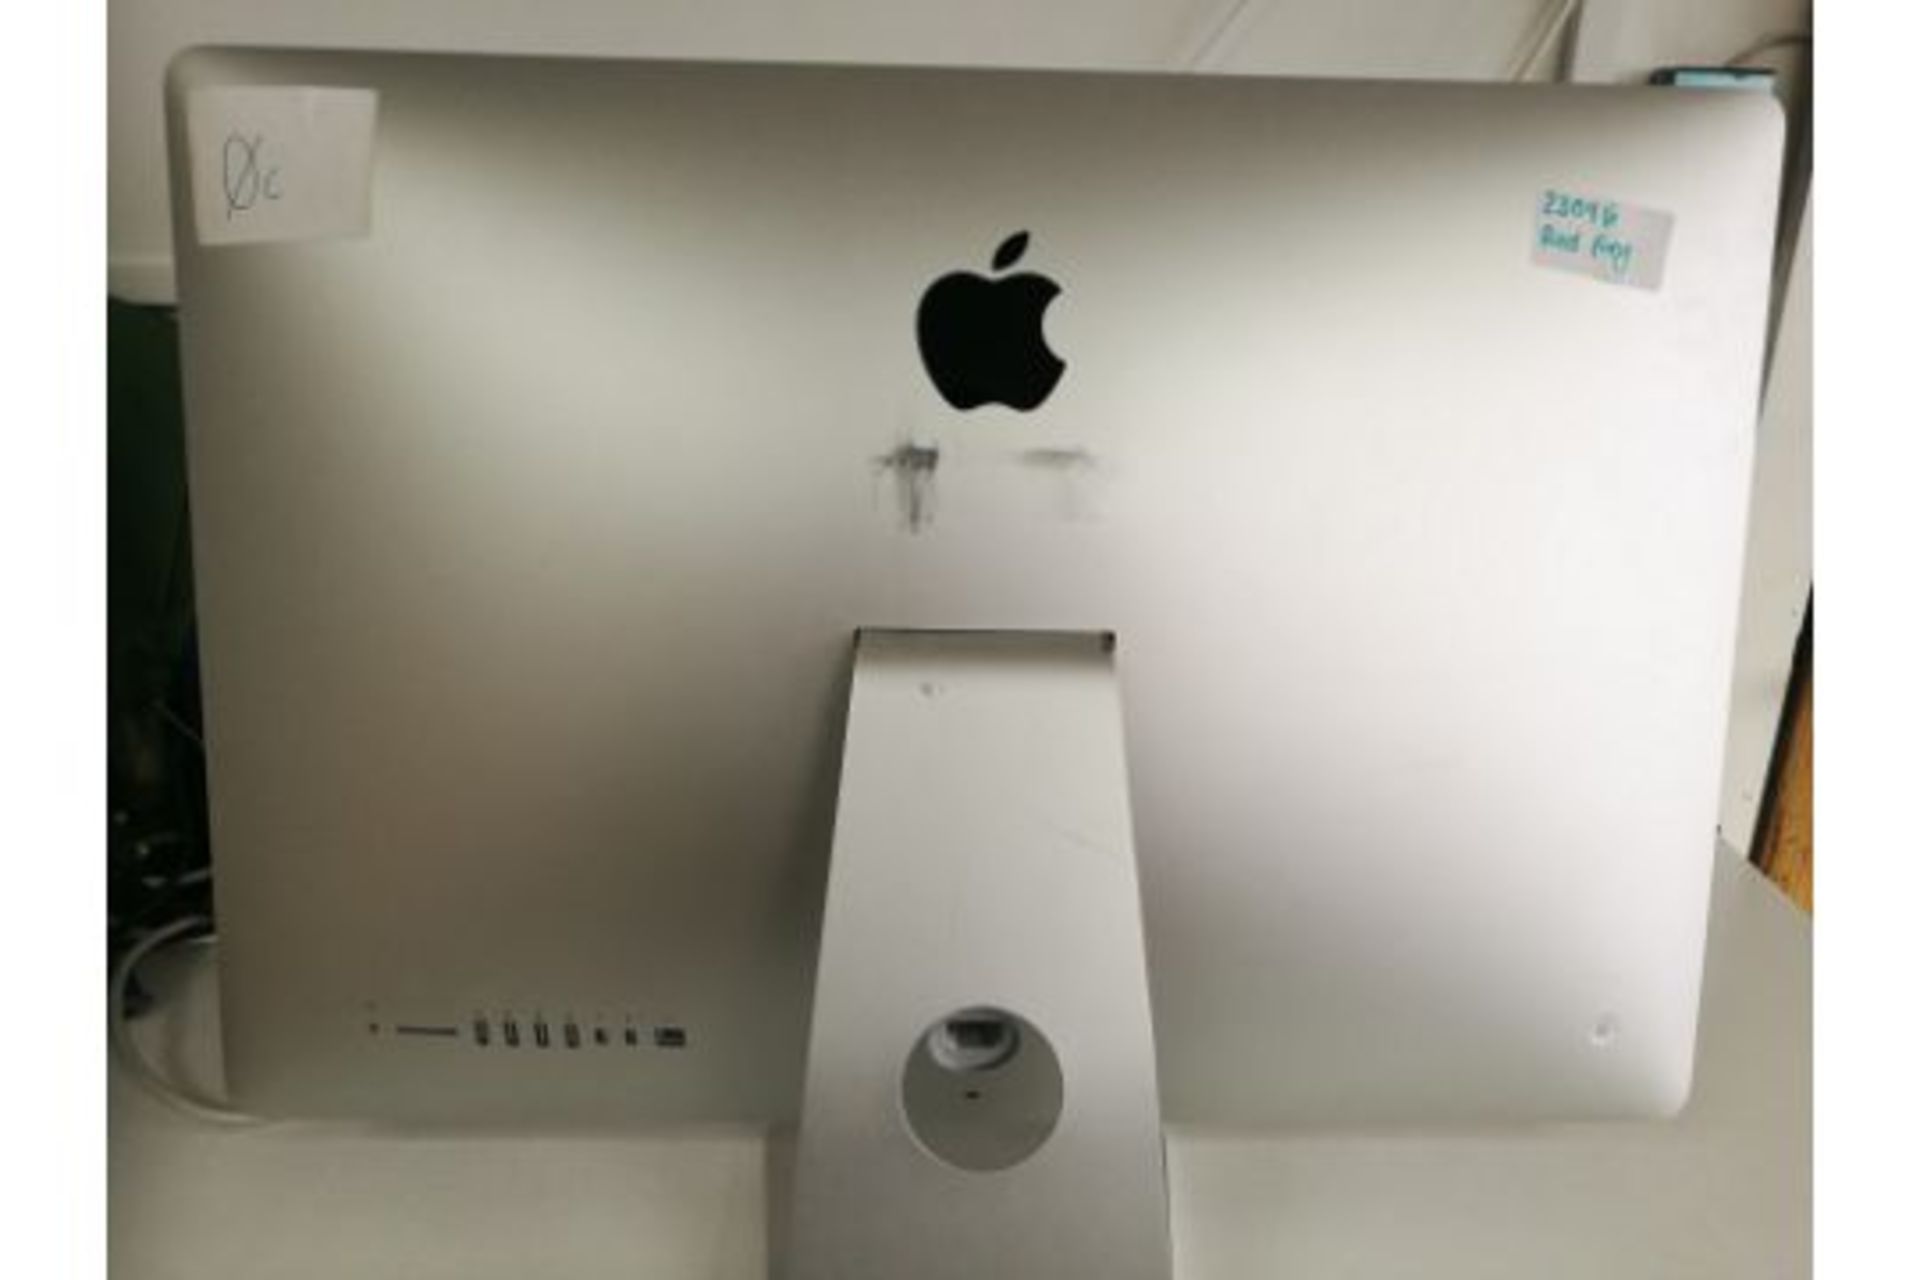 Apple iMac (Retina 5K, 27-inch, Late 2014) - Image 5 of 5